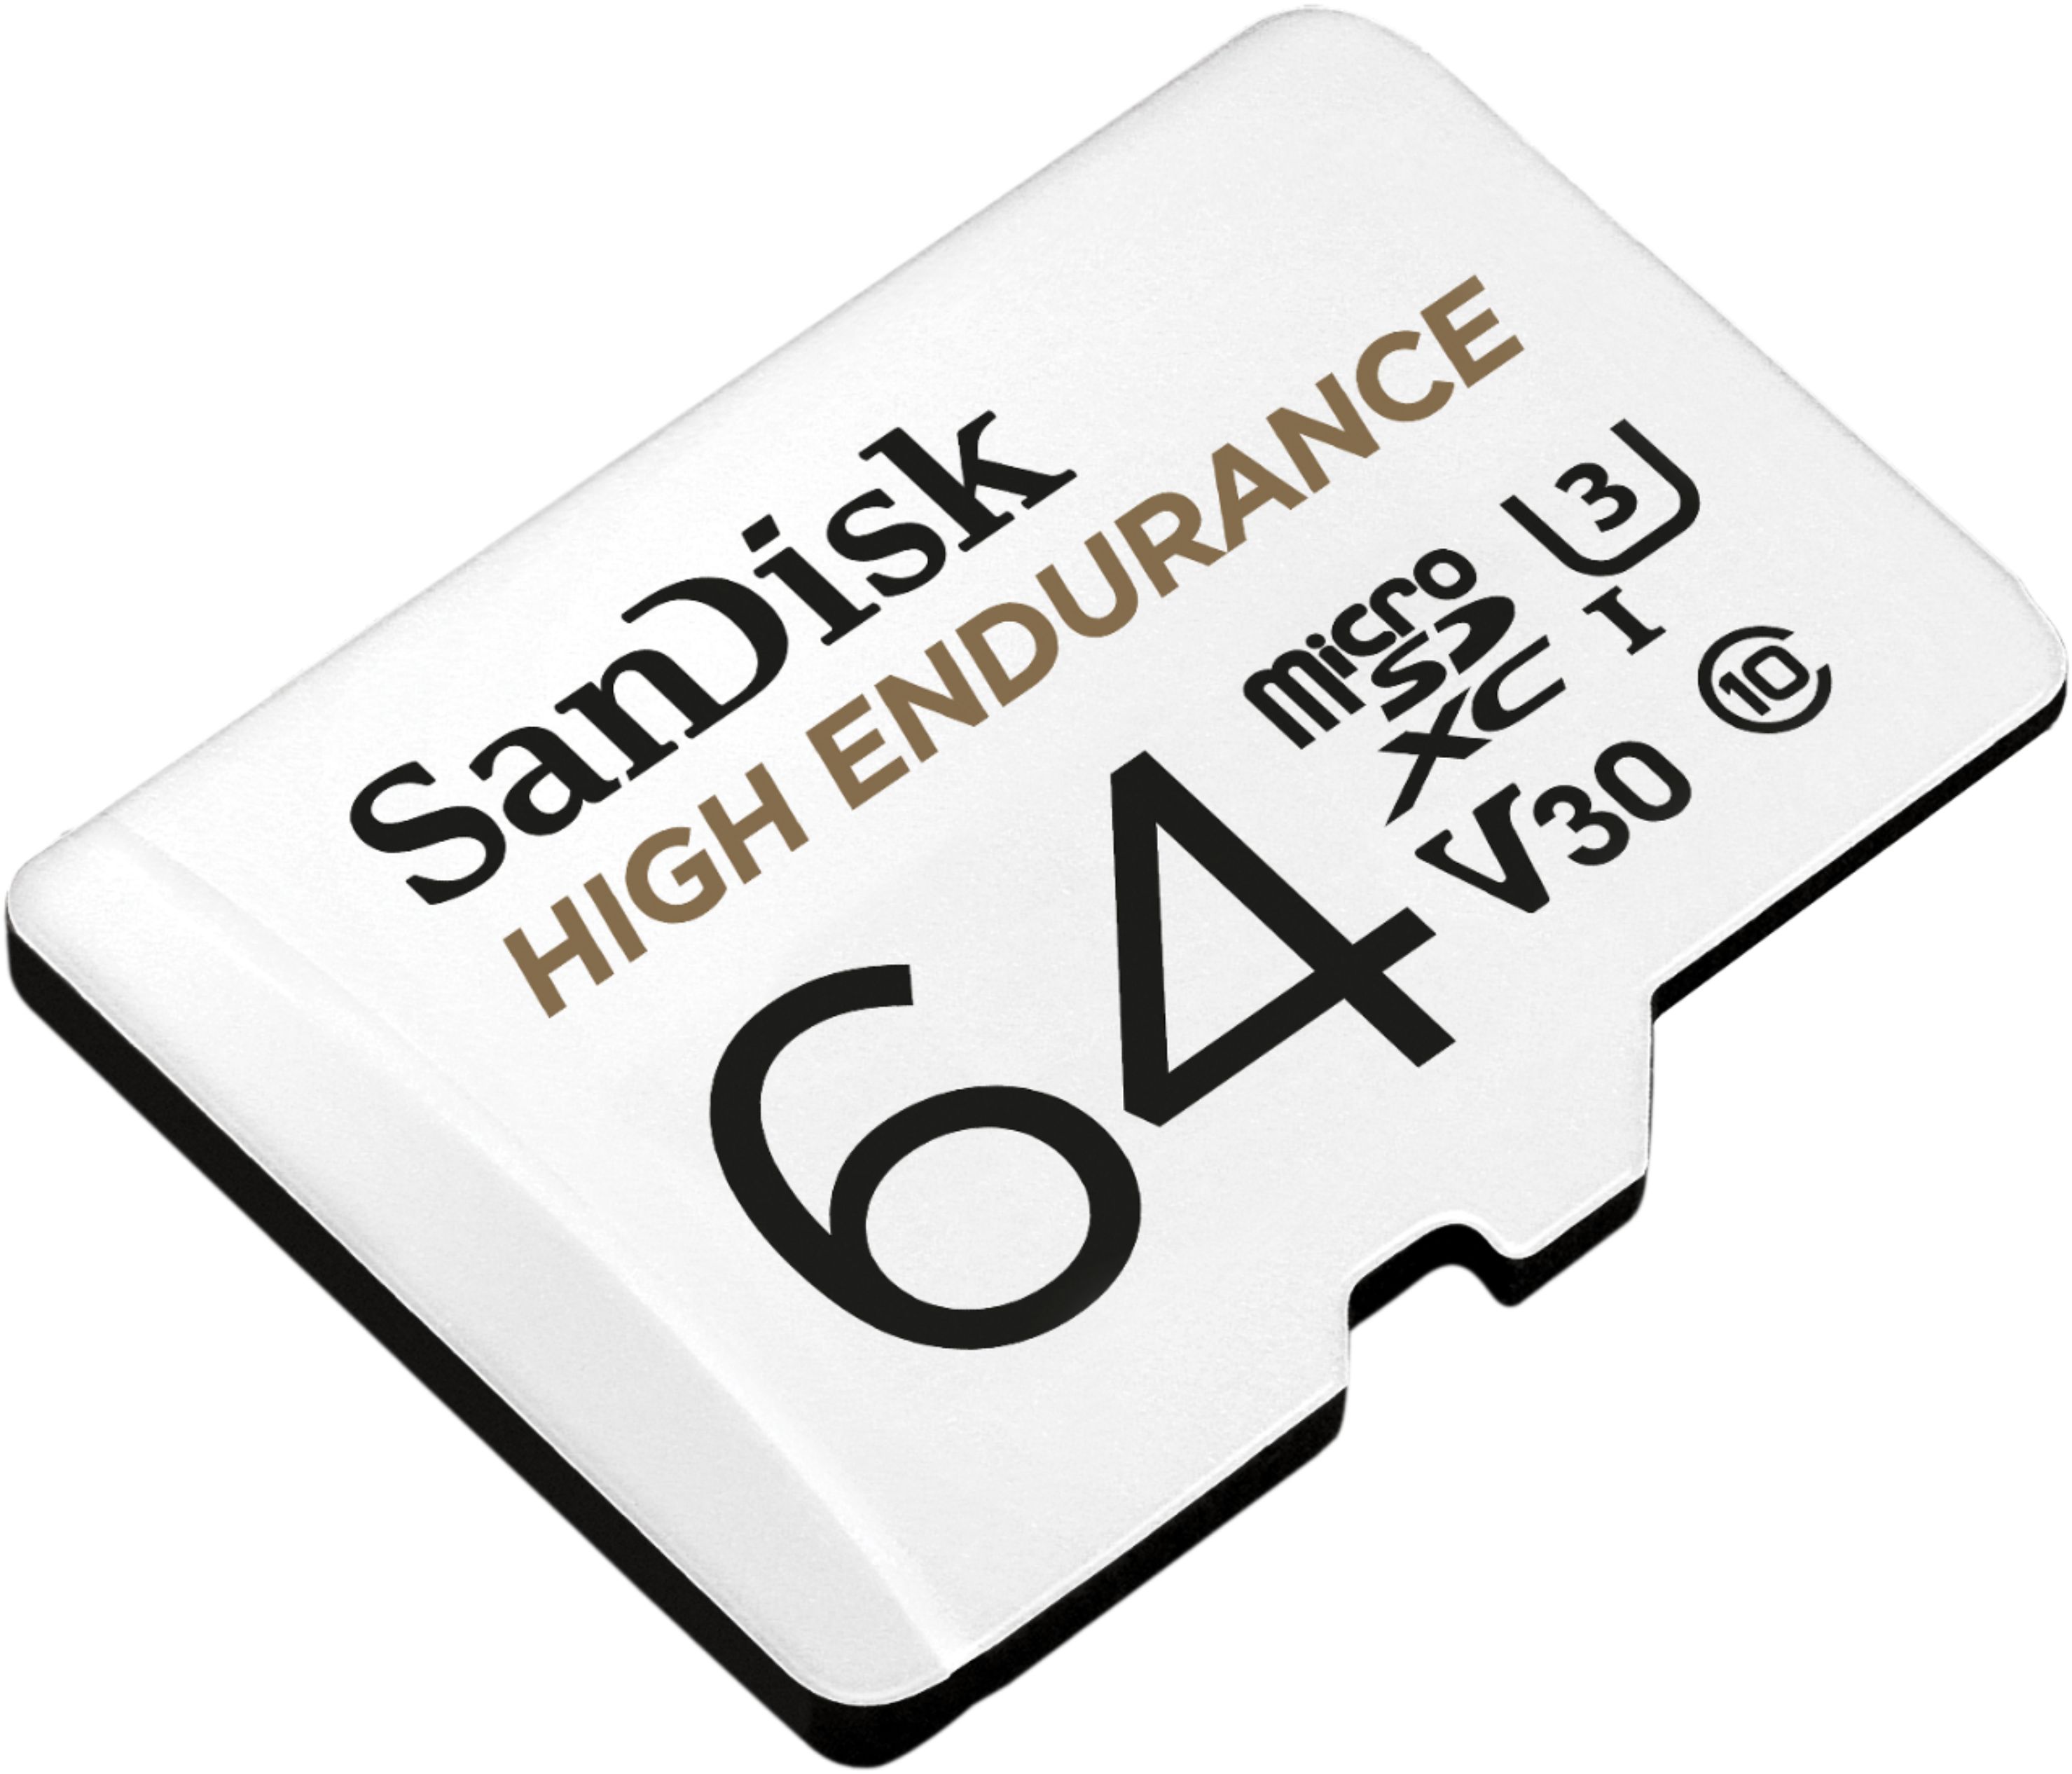 64gb Micro Sd Card - Best Buy